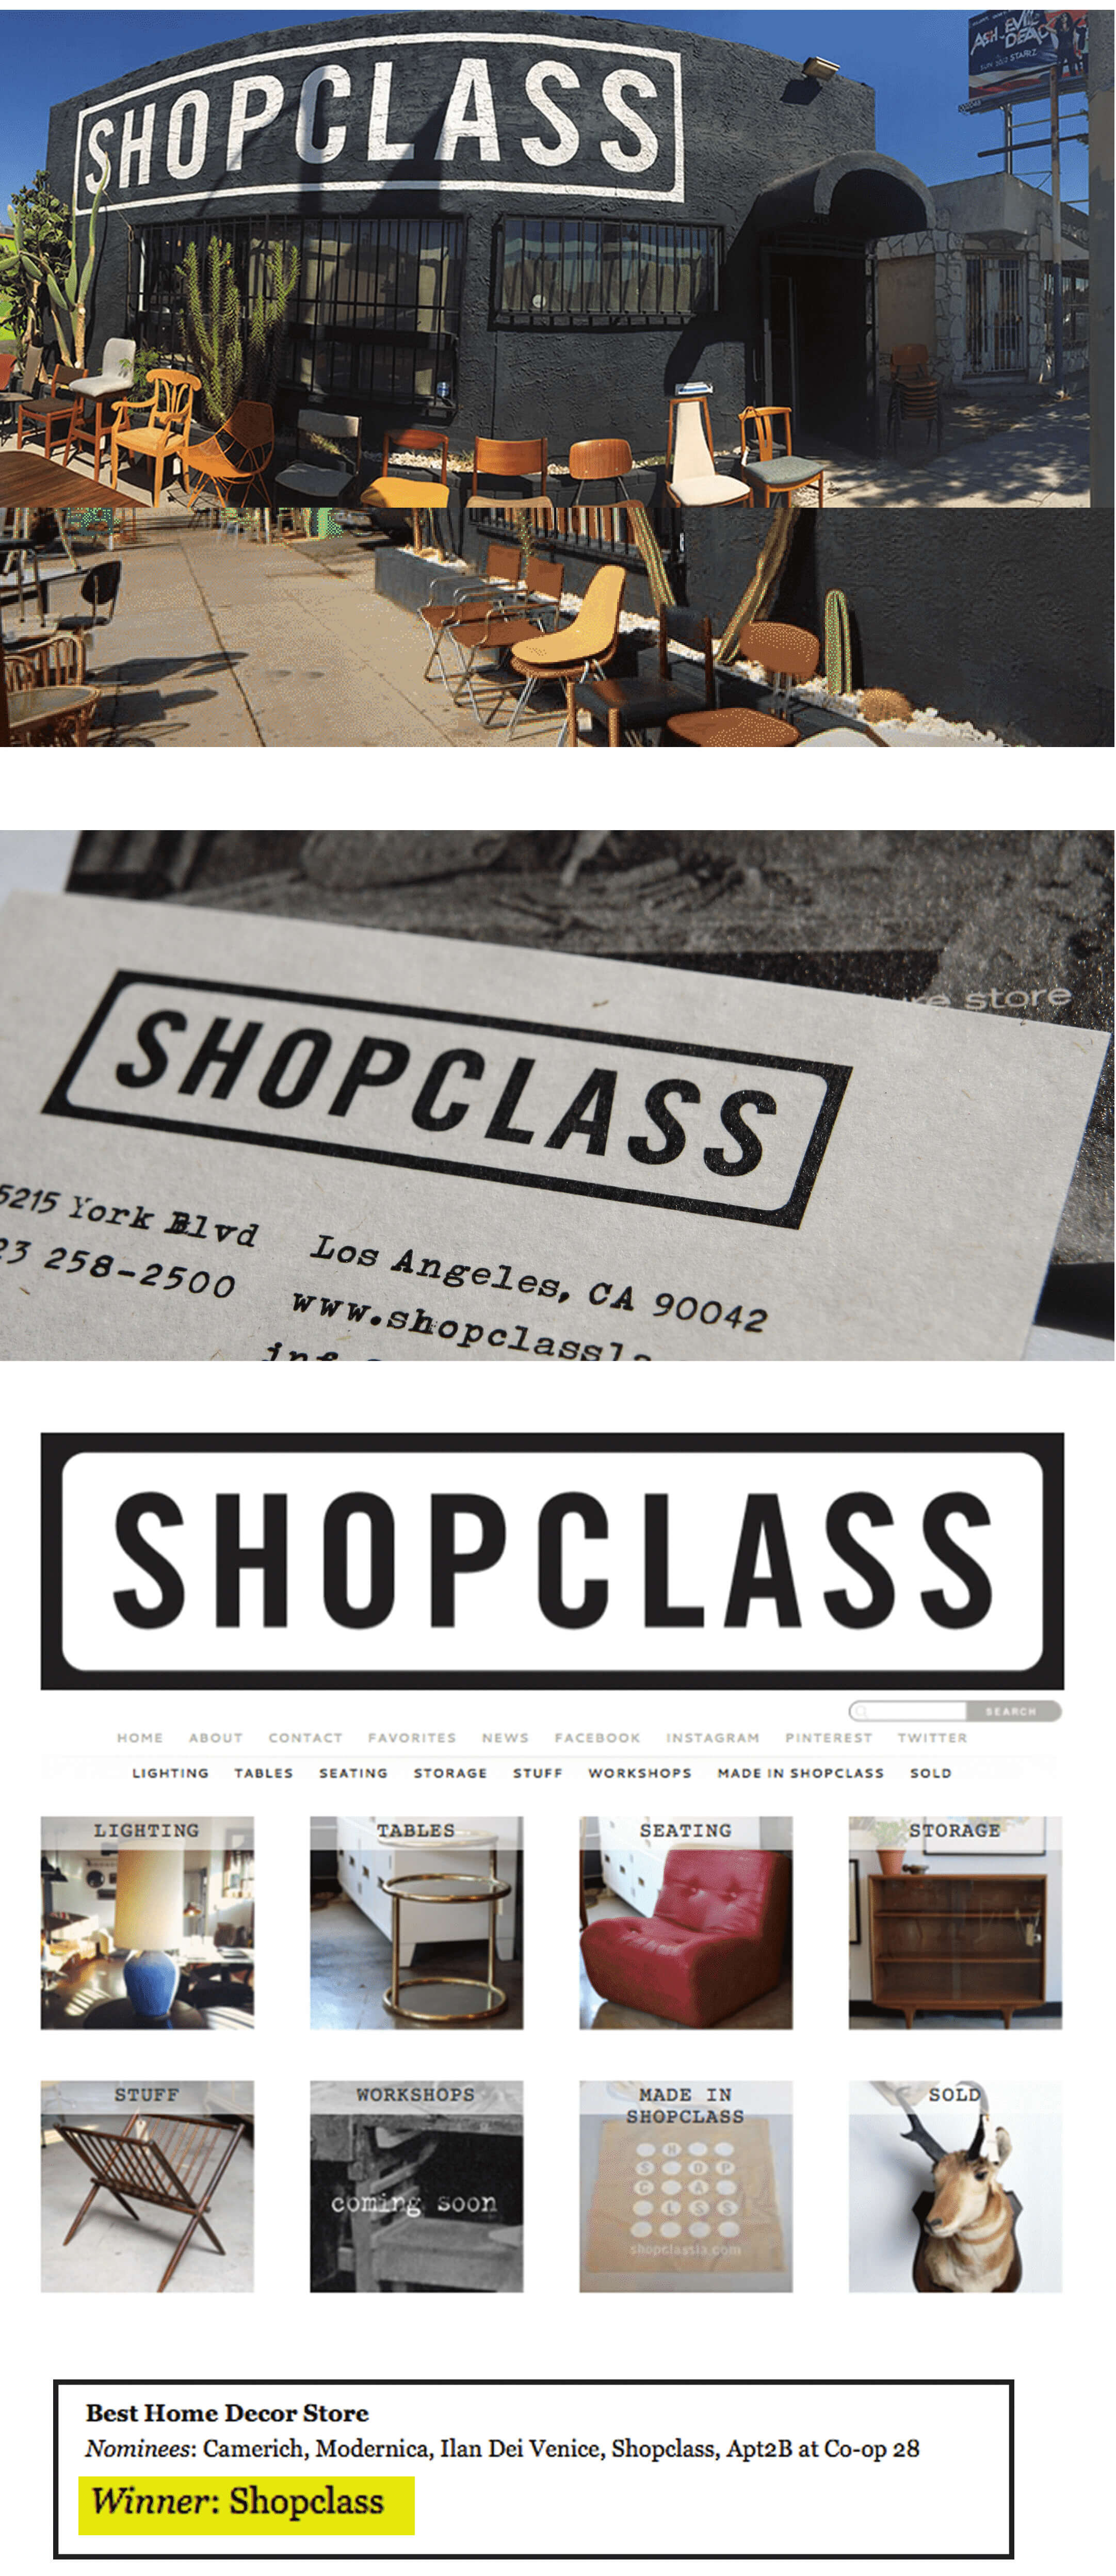 shopclass-retail-store-brand-design-2.jpg